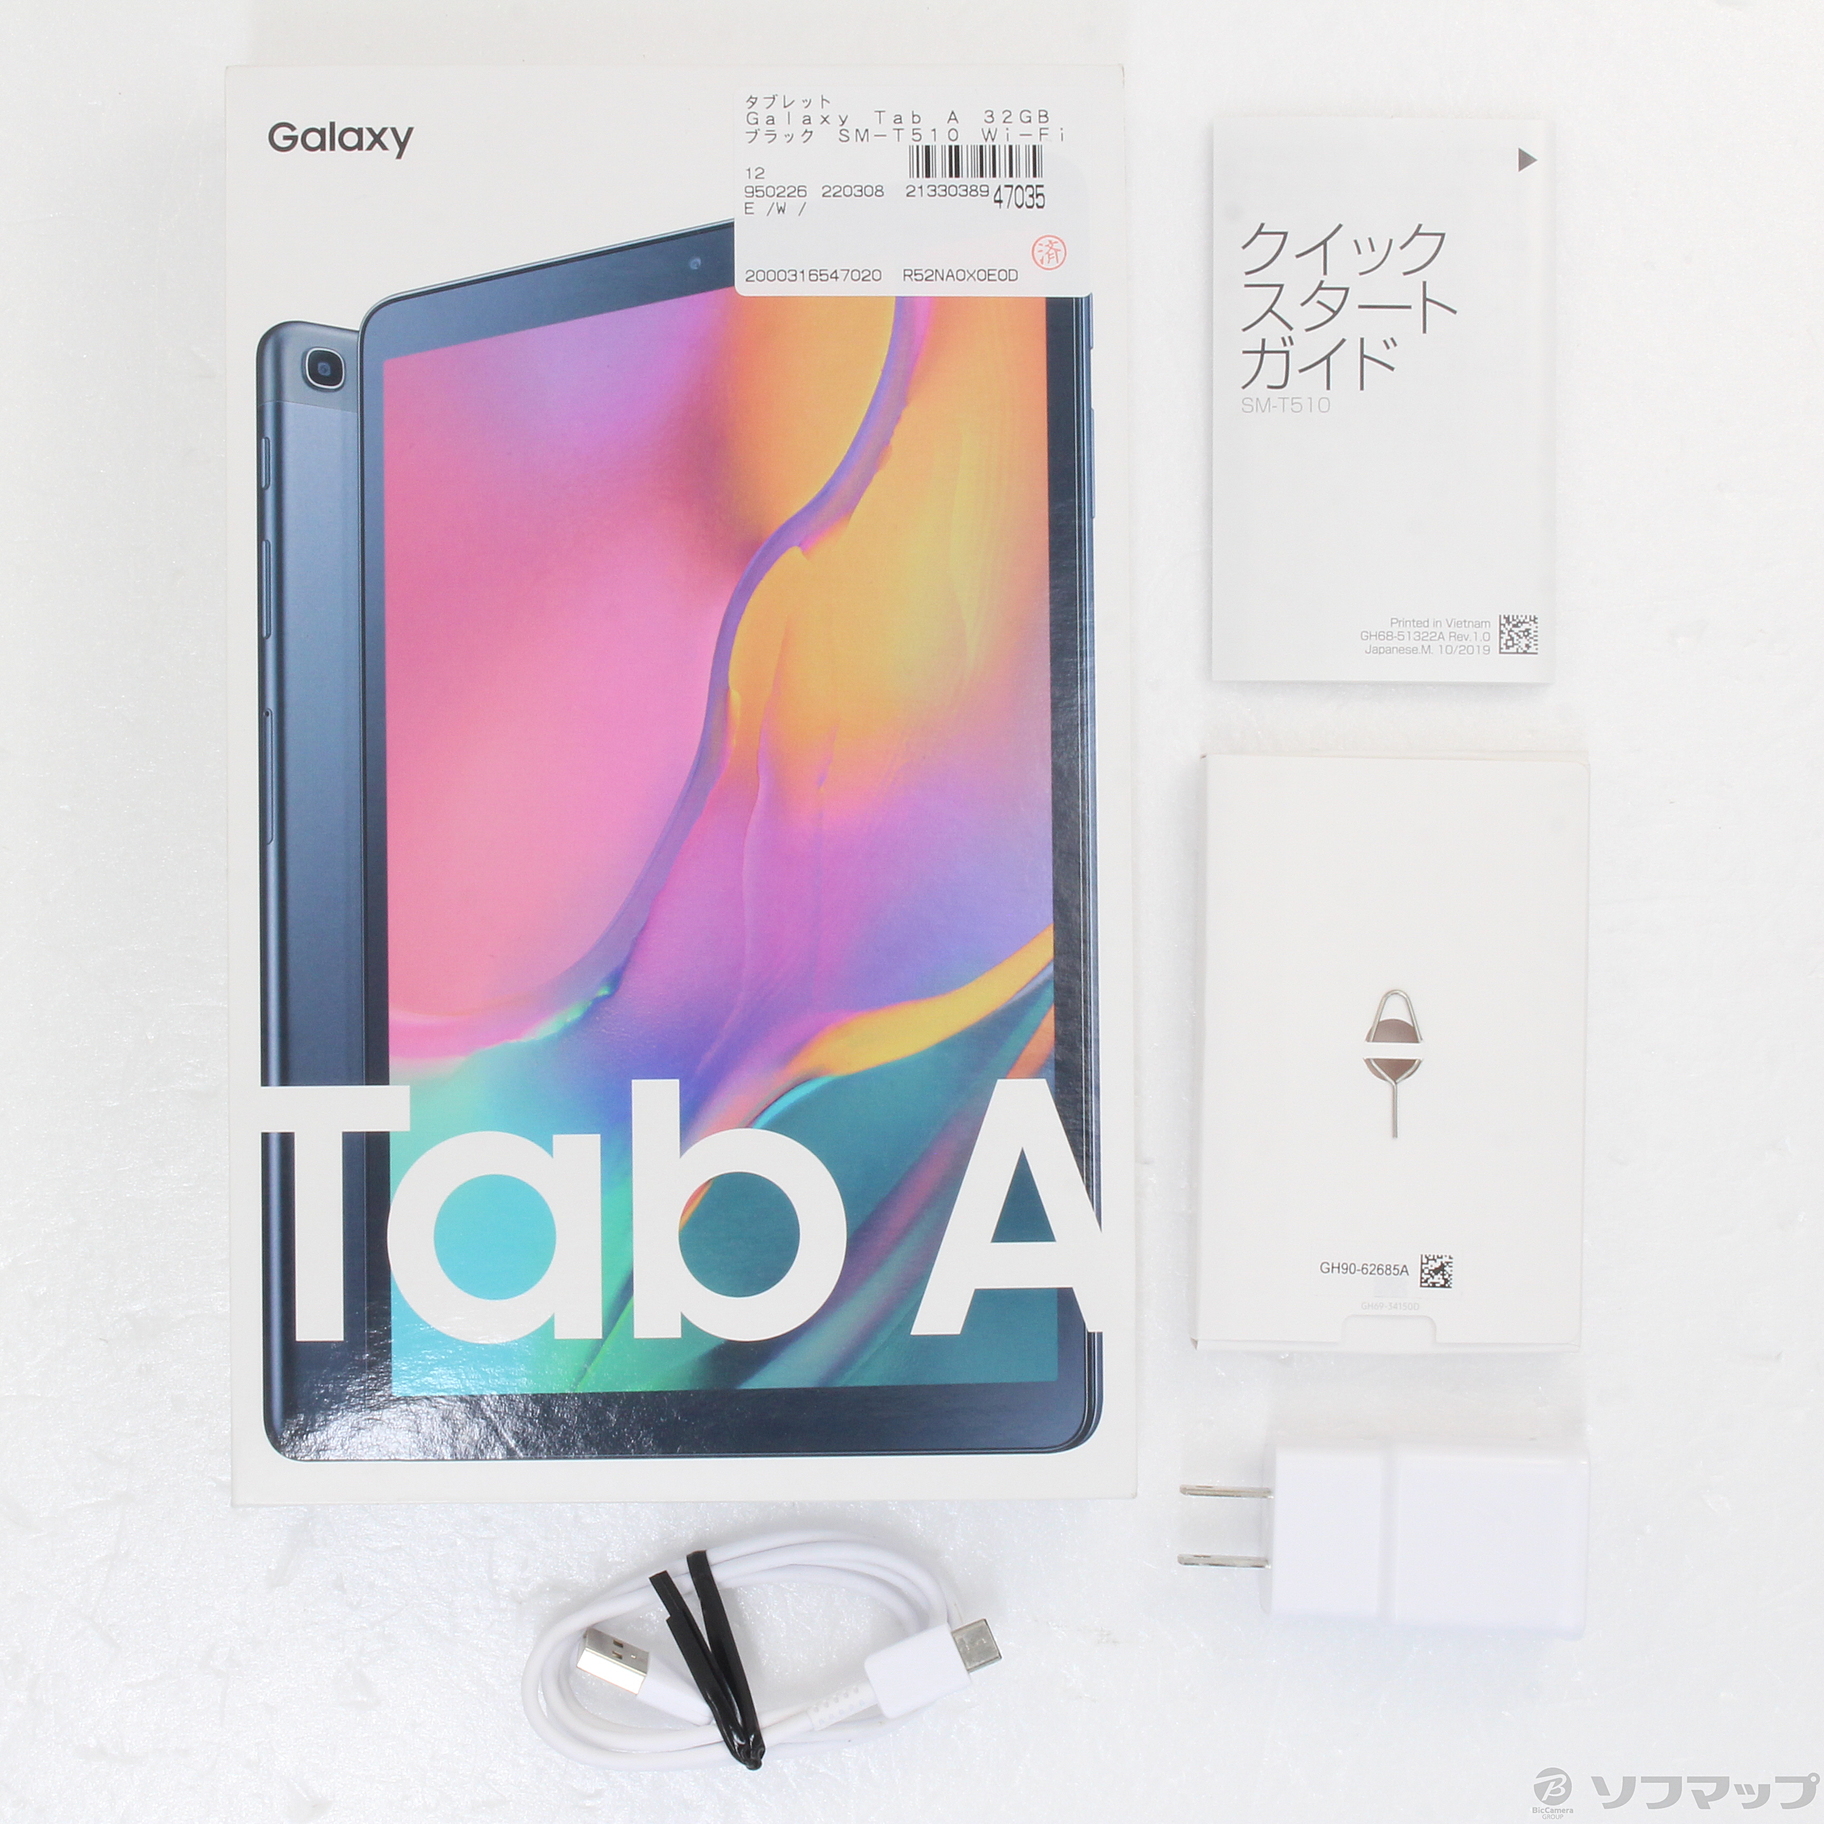 Galaxy Tab A SM-T510 32GB  タブレット